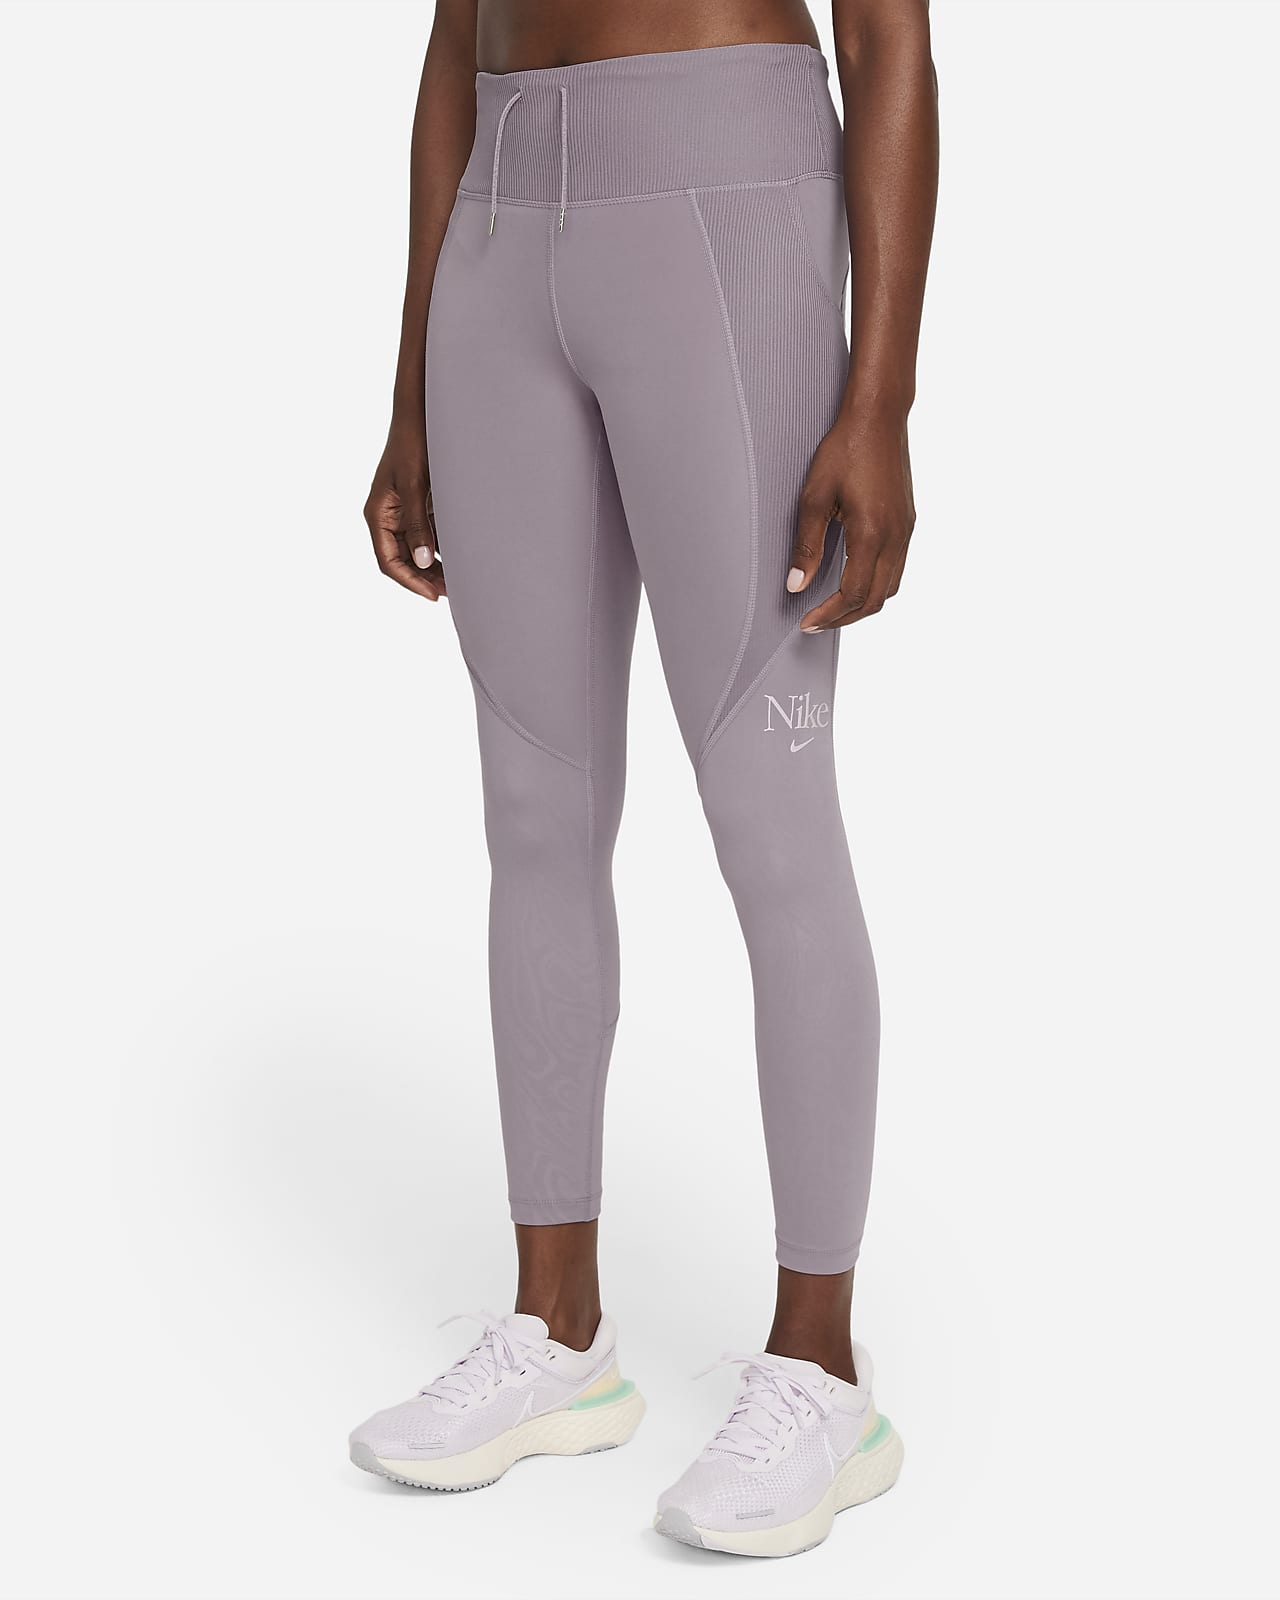 Buy Nike Women Running Leggings, Nike Women Clothes